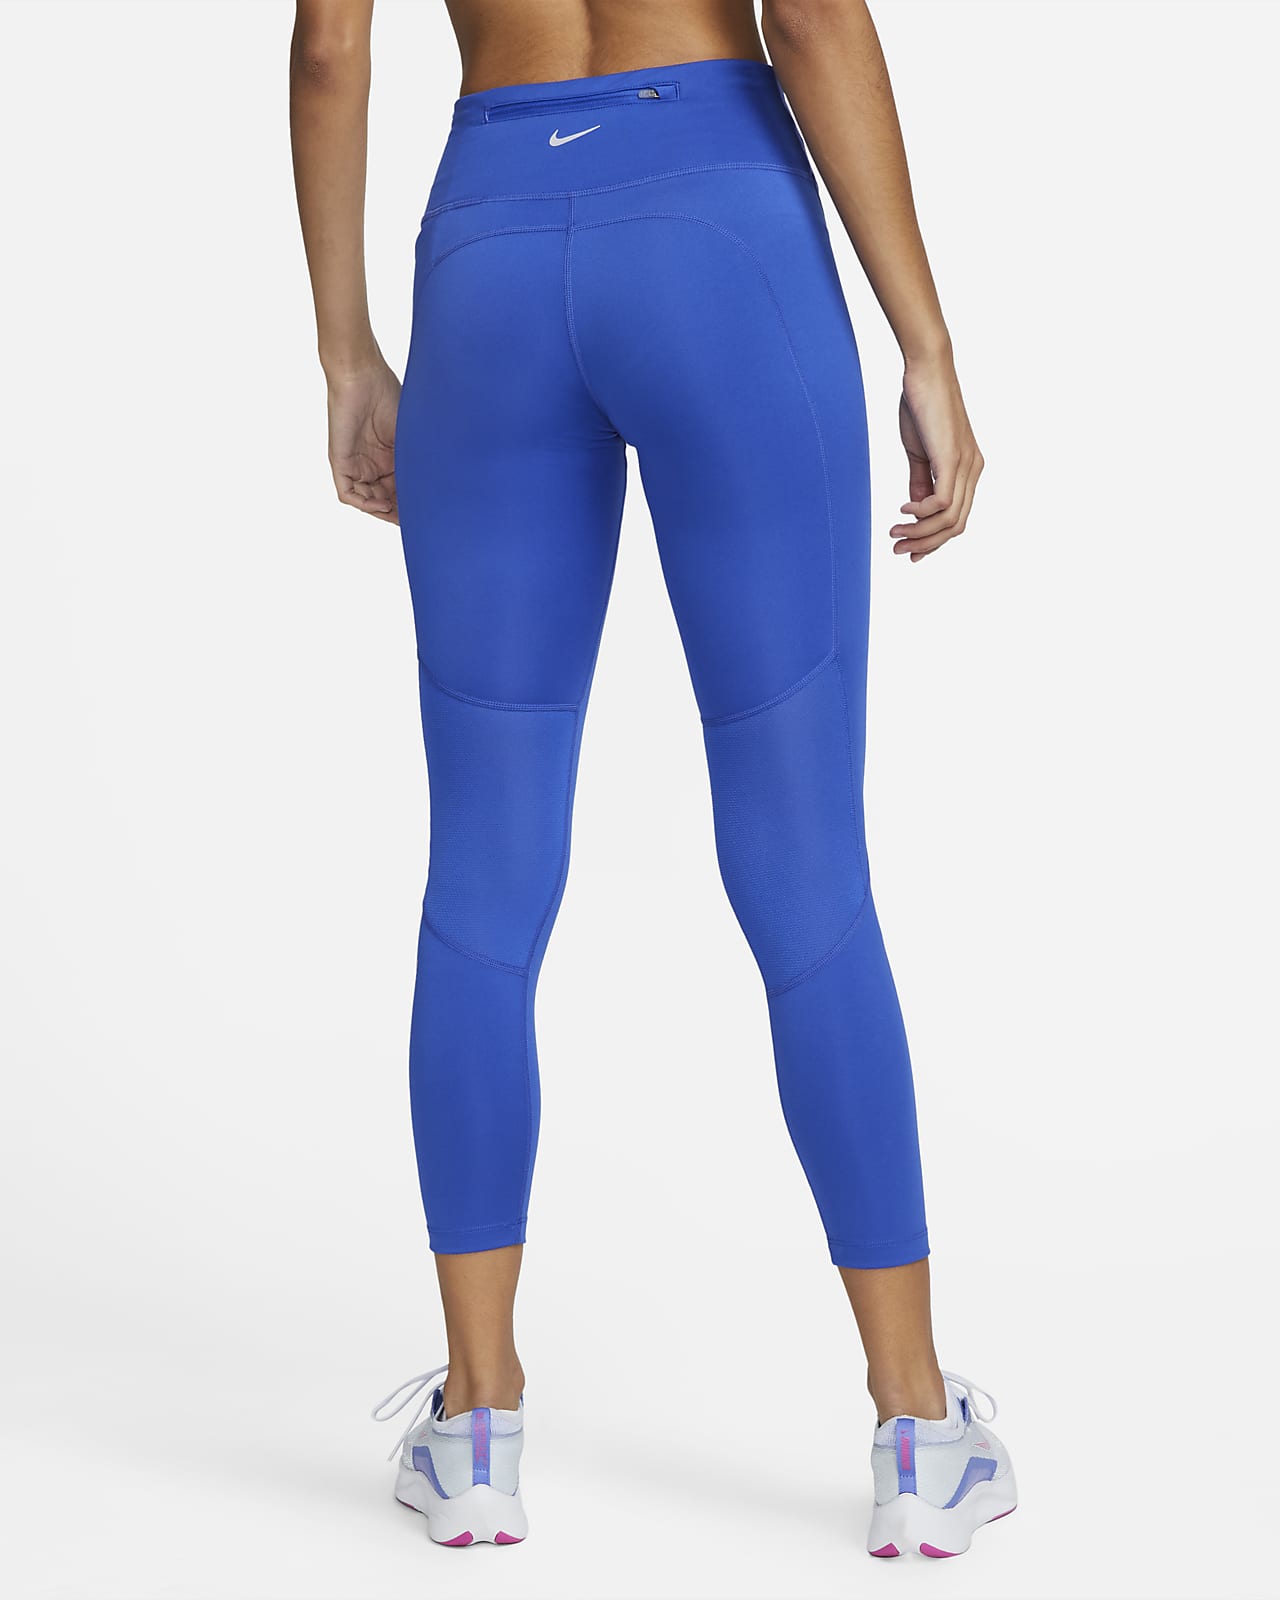 Legging Nike Fast Tght Azul - Compre Agora